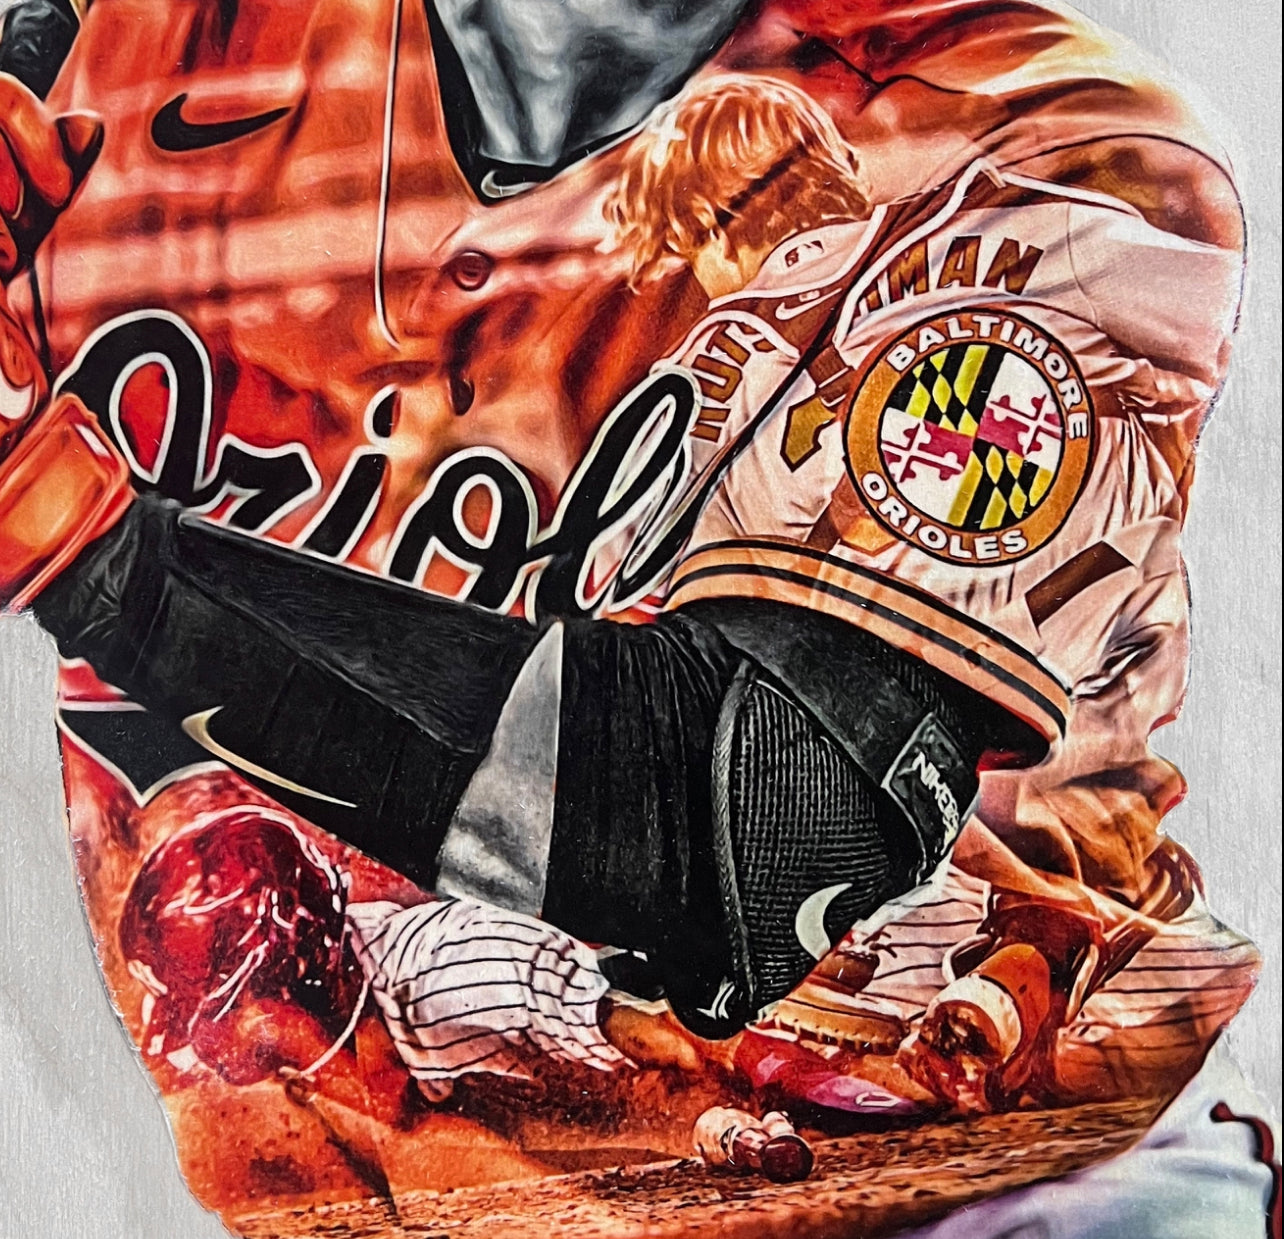 Adley Rutschman Autographed Baltimore Orioles 16x20 Photo - JSA COA (Orange  Background)